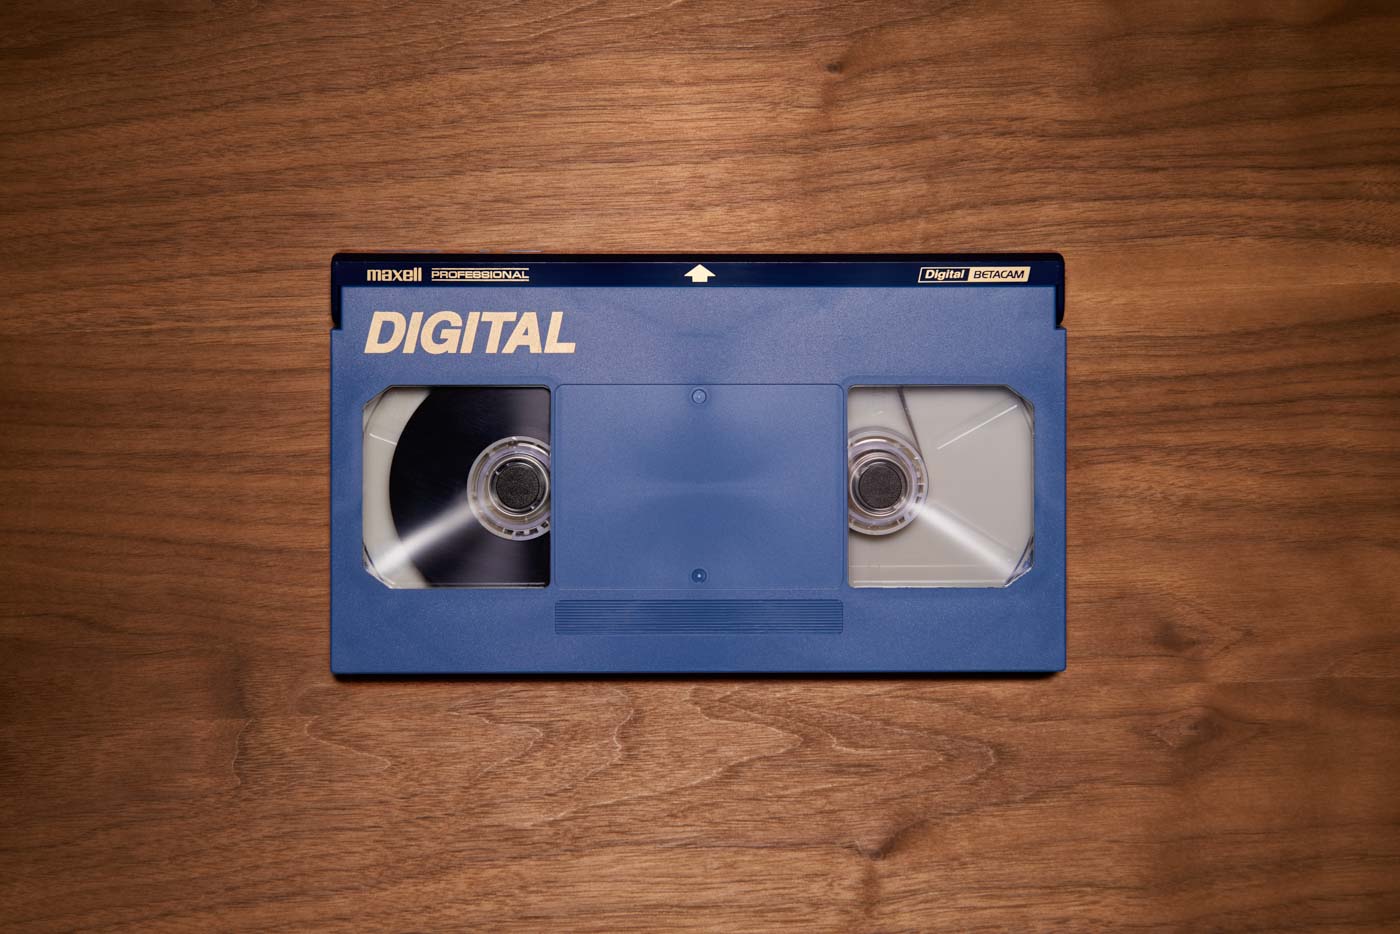 Digital Betacam Tape on wood background